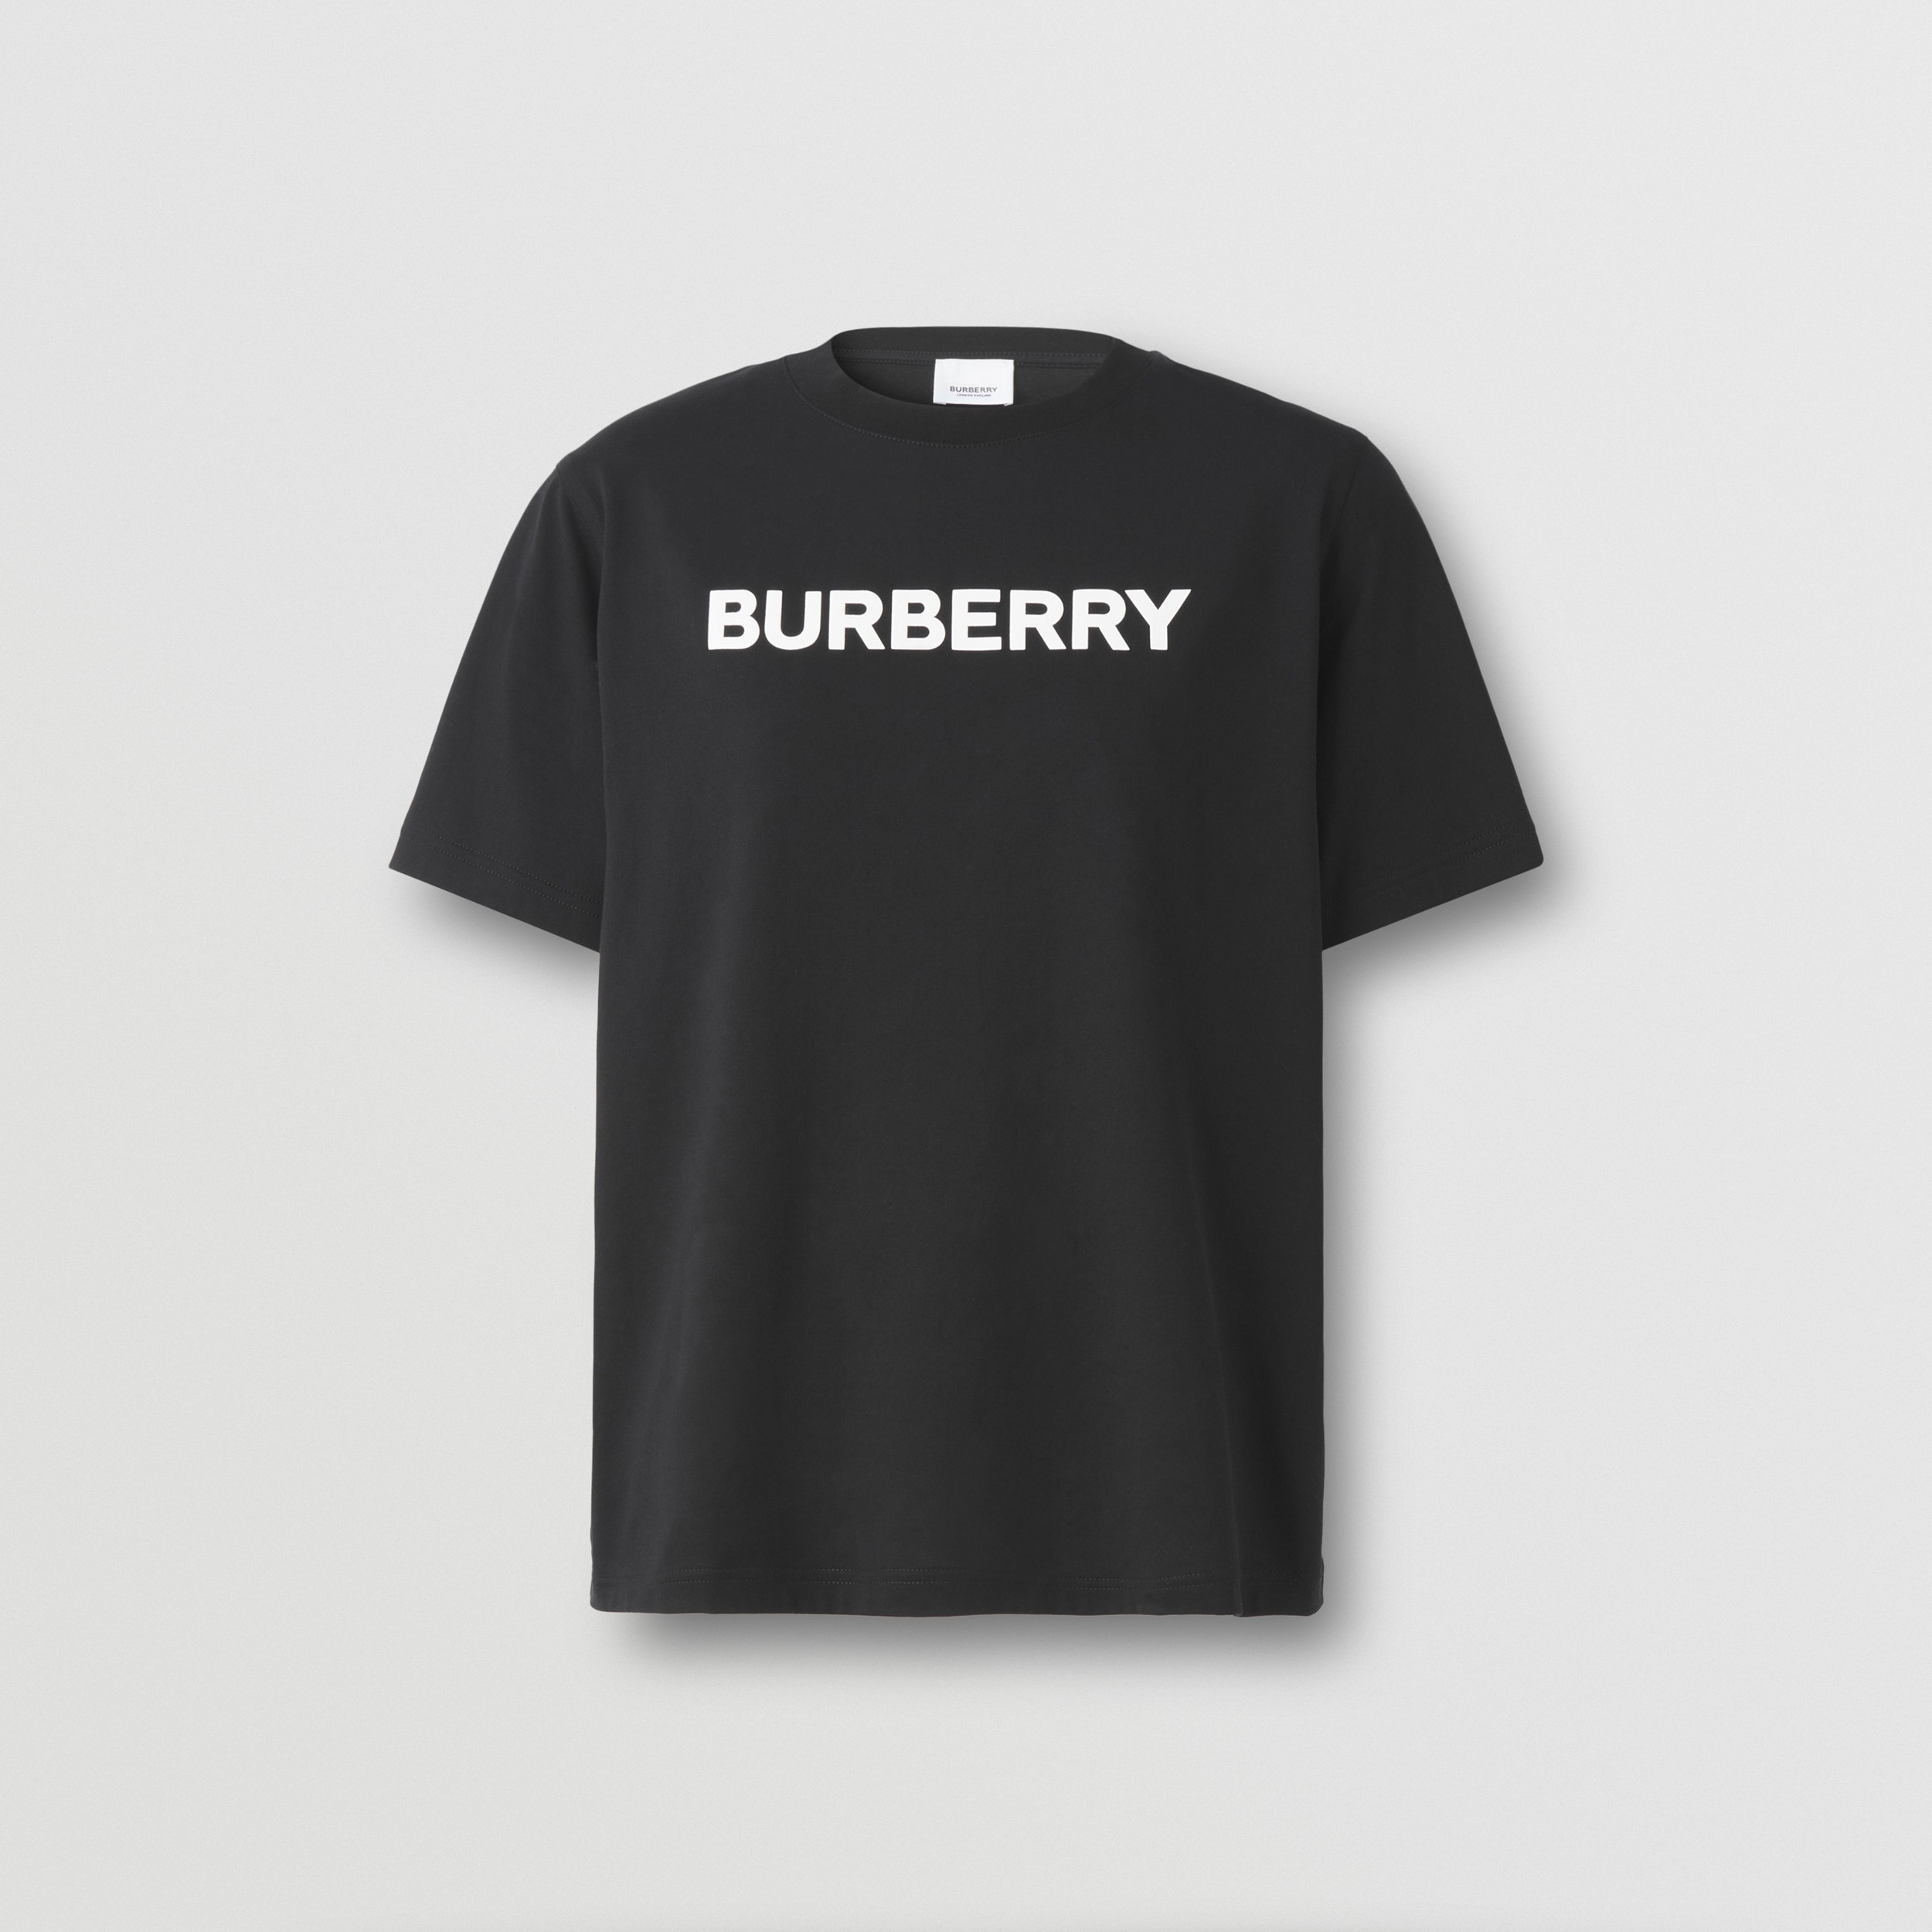 Burberry Tシャツ equaljustice.wy.gov